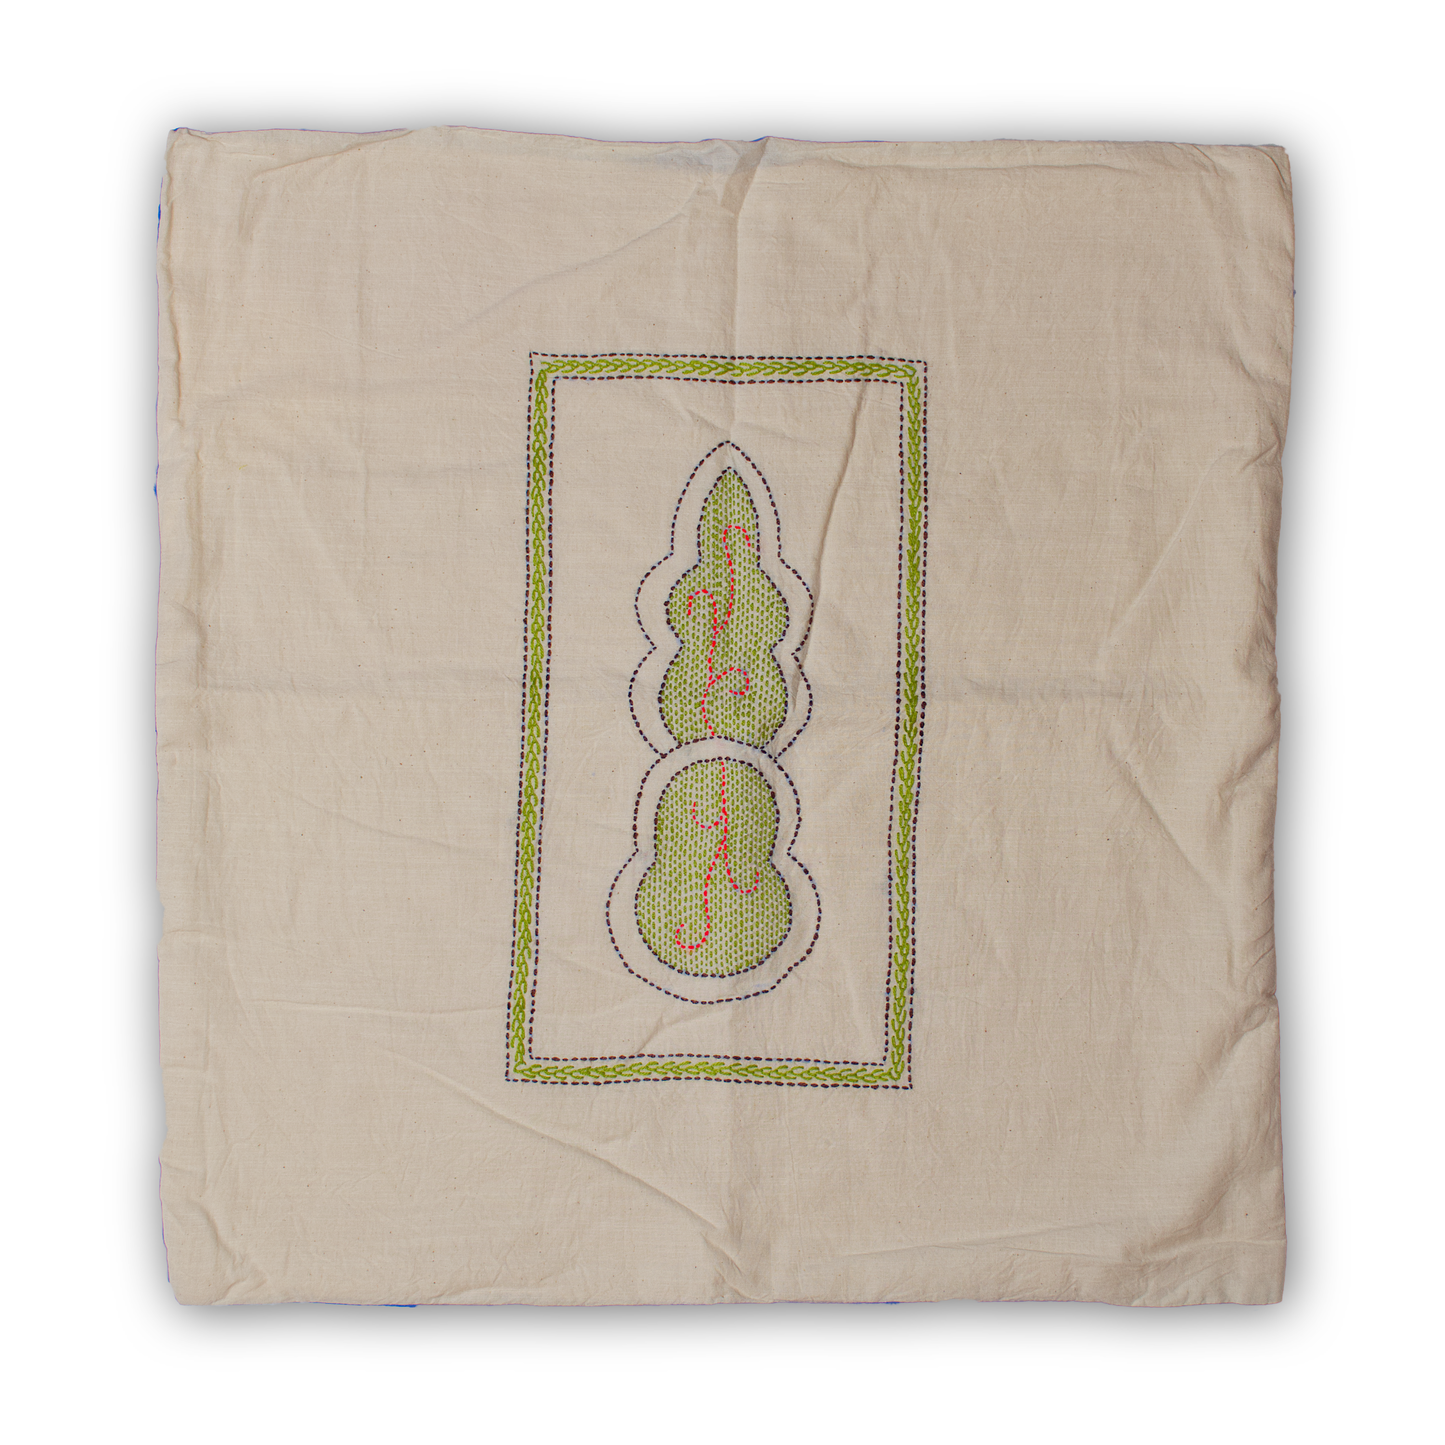 Cushion Covers - Gaibandha (Leaf) Design